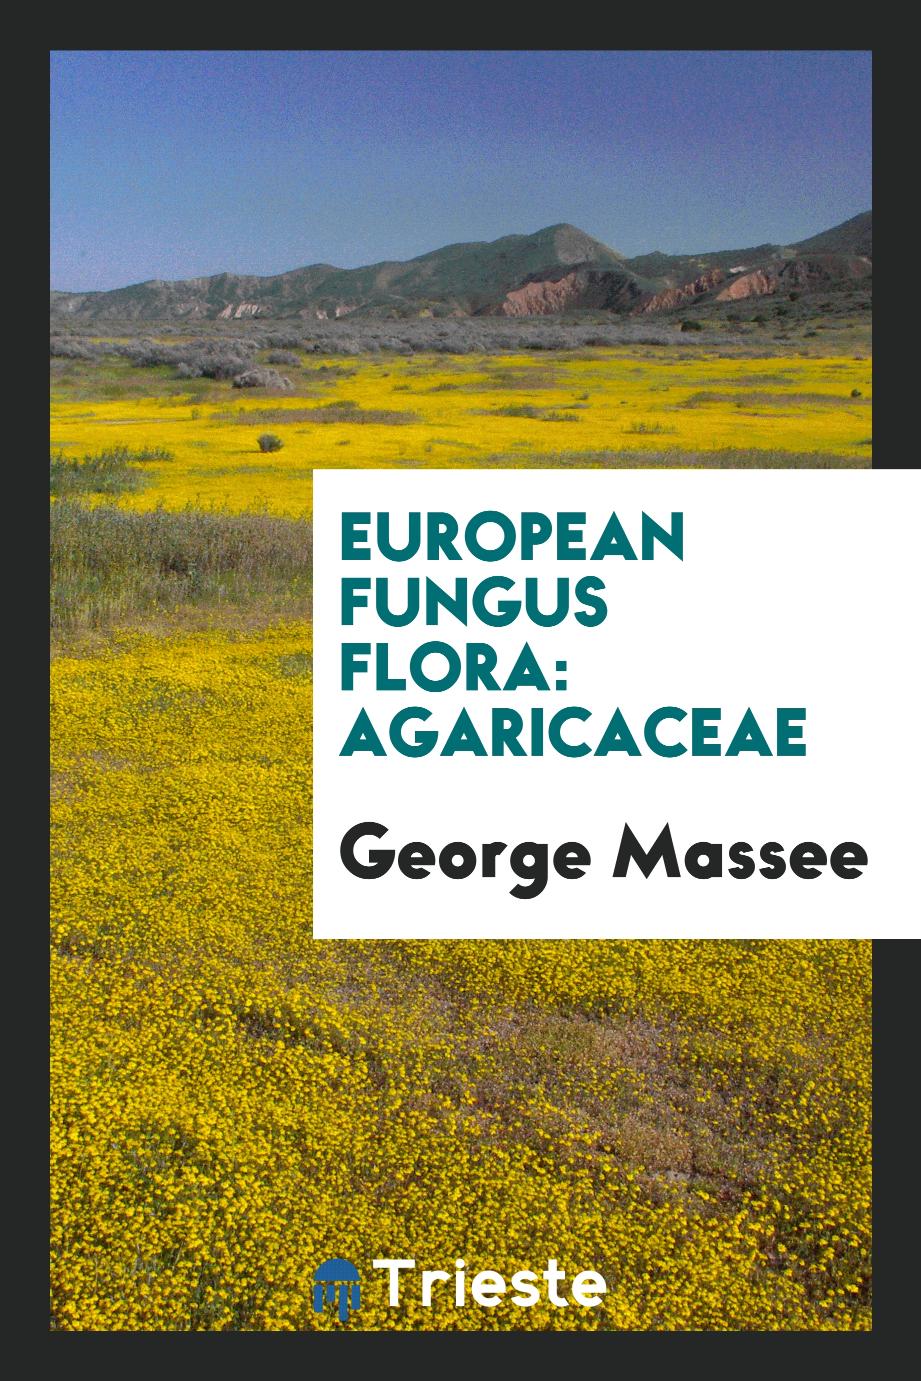 European fungus flora: agaricaceae